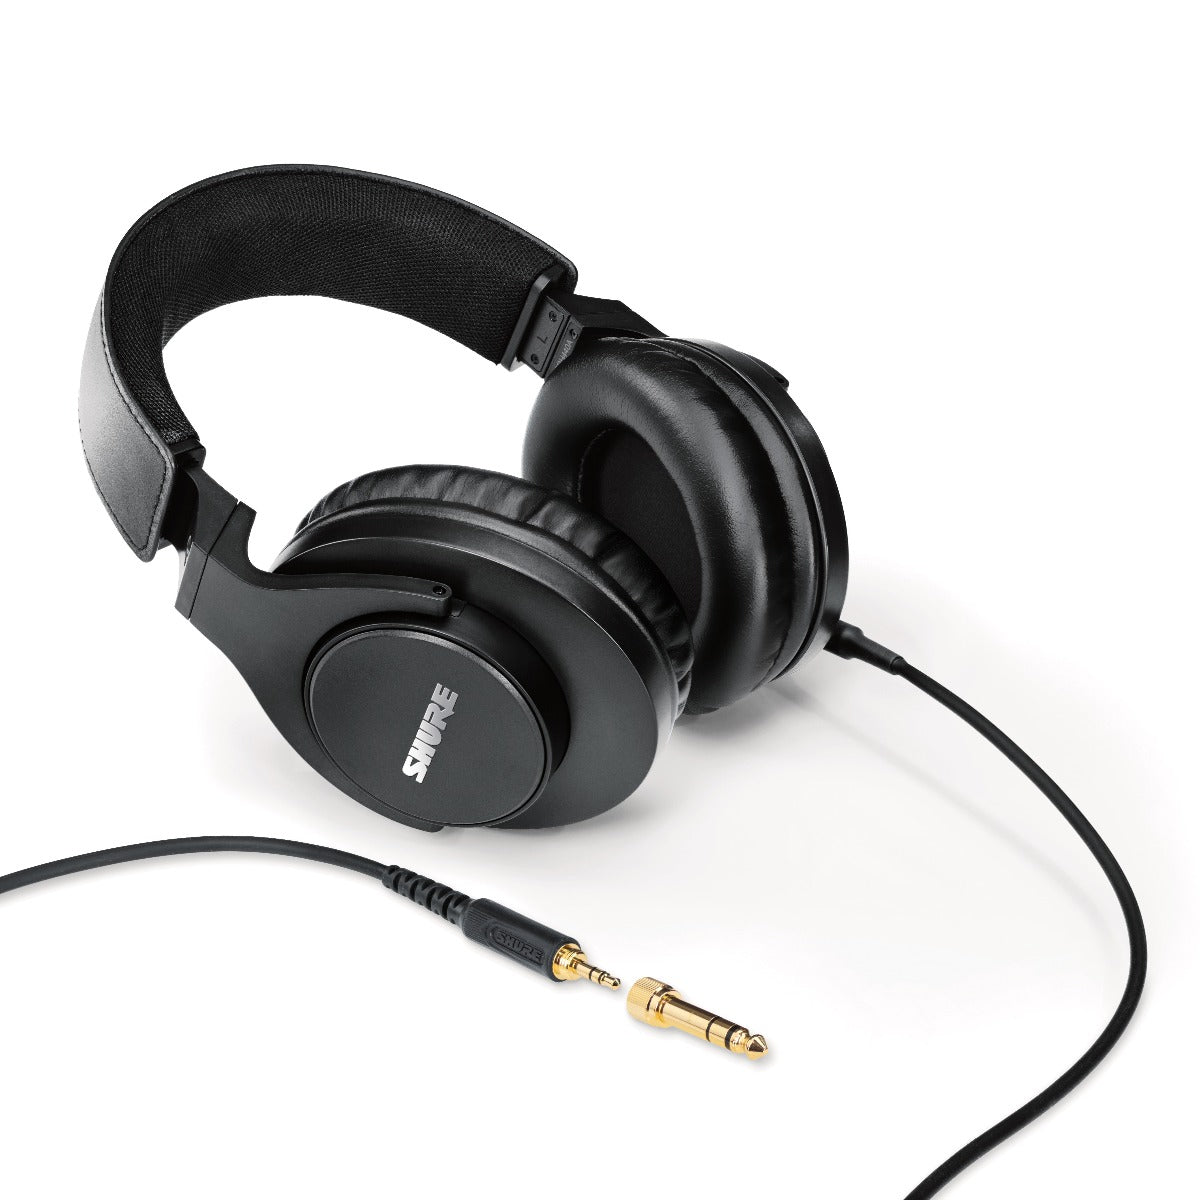 Shure SRH440A Professional Studio Headphones, View 1